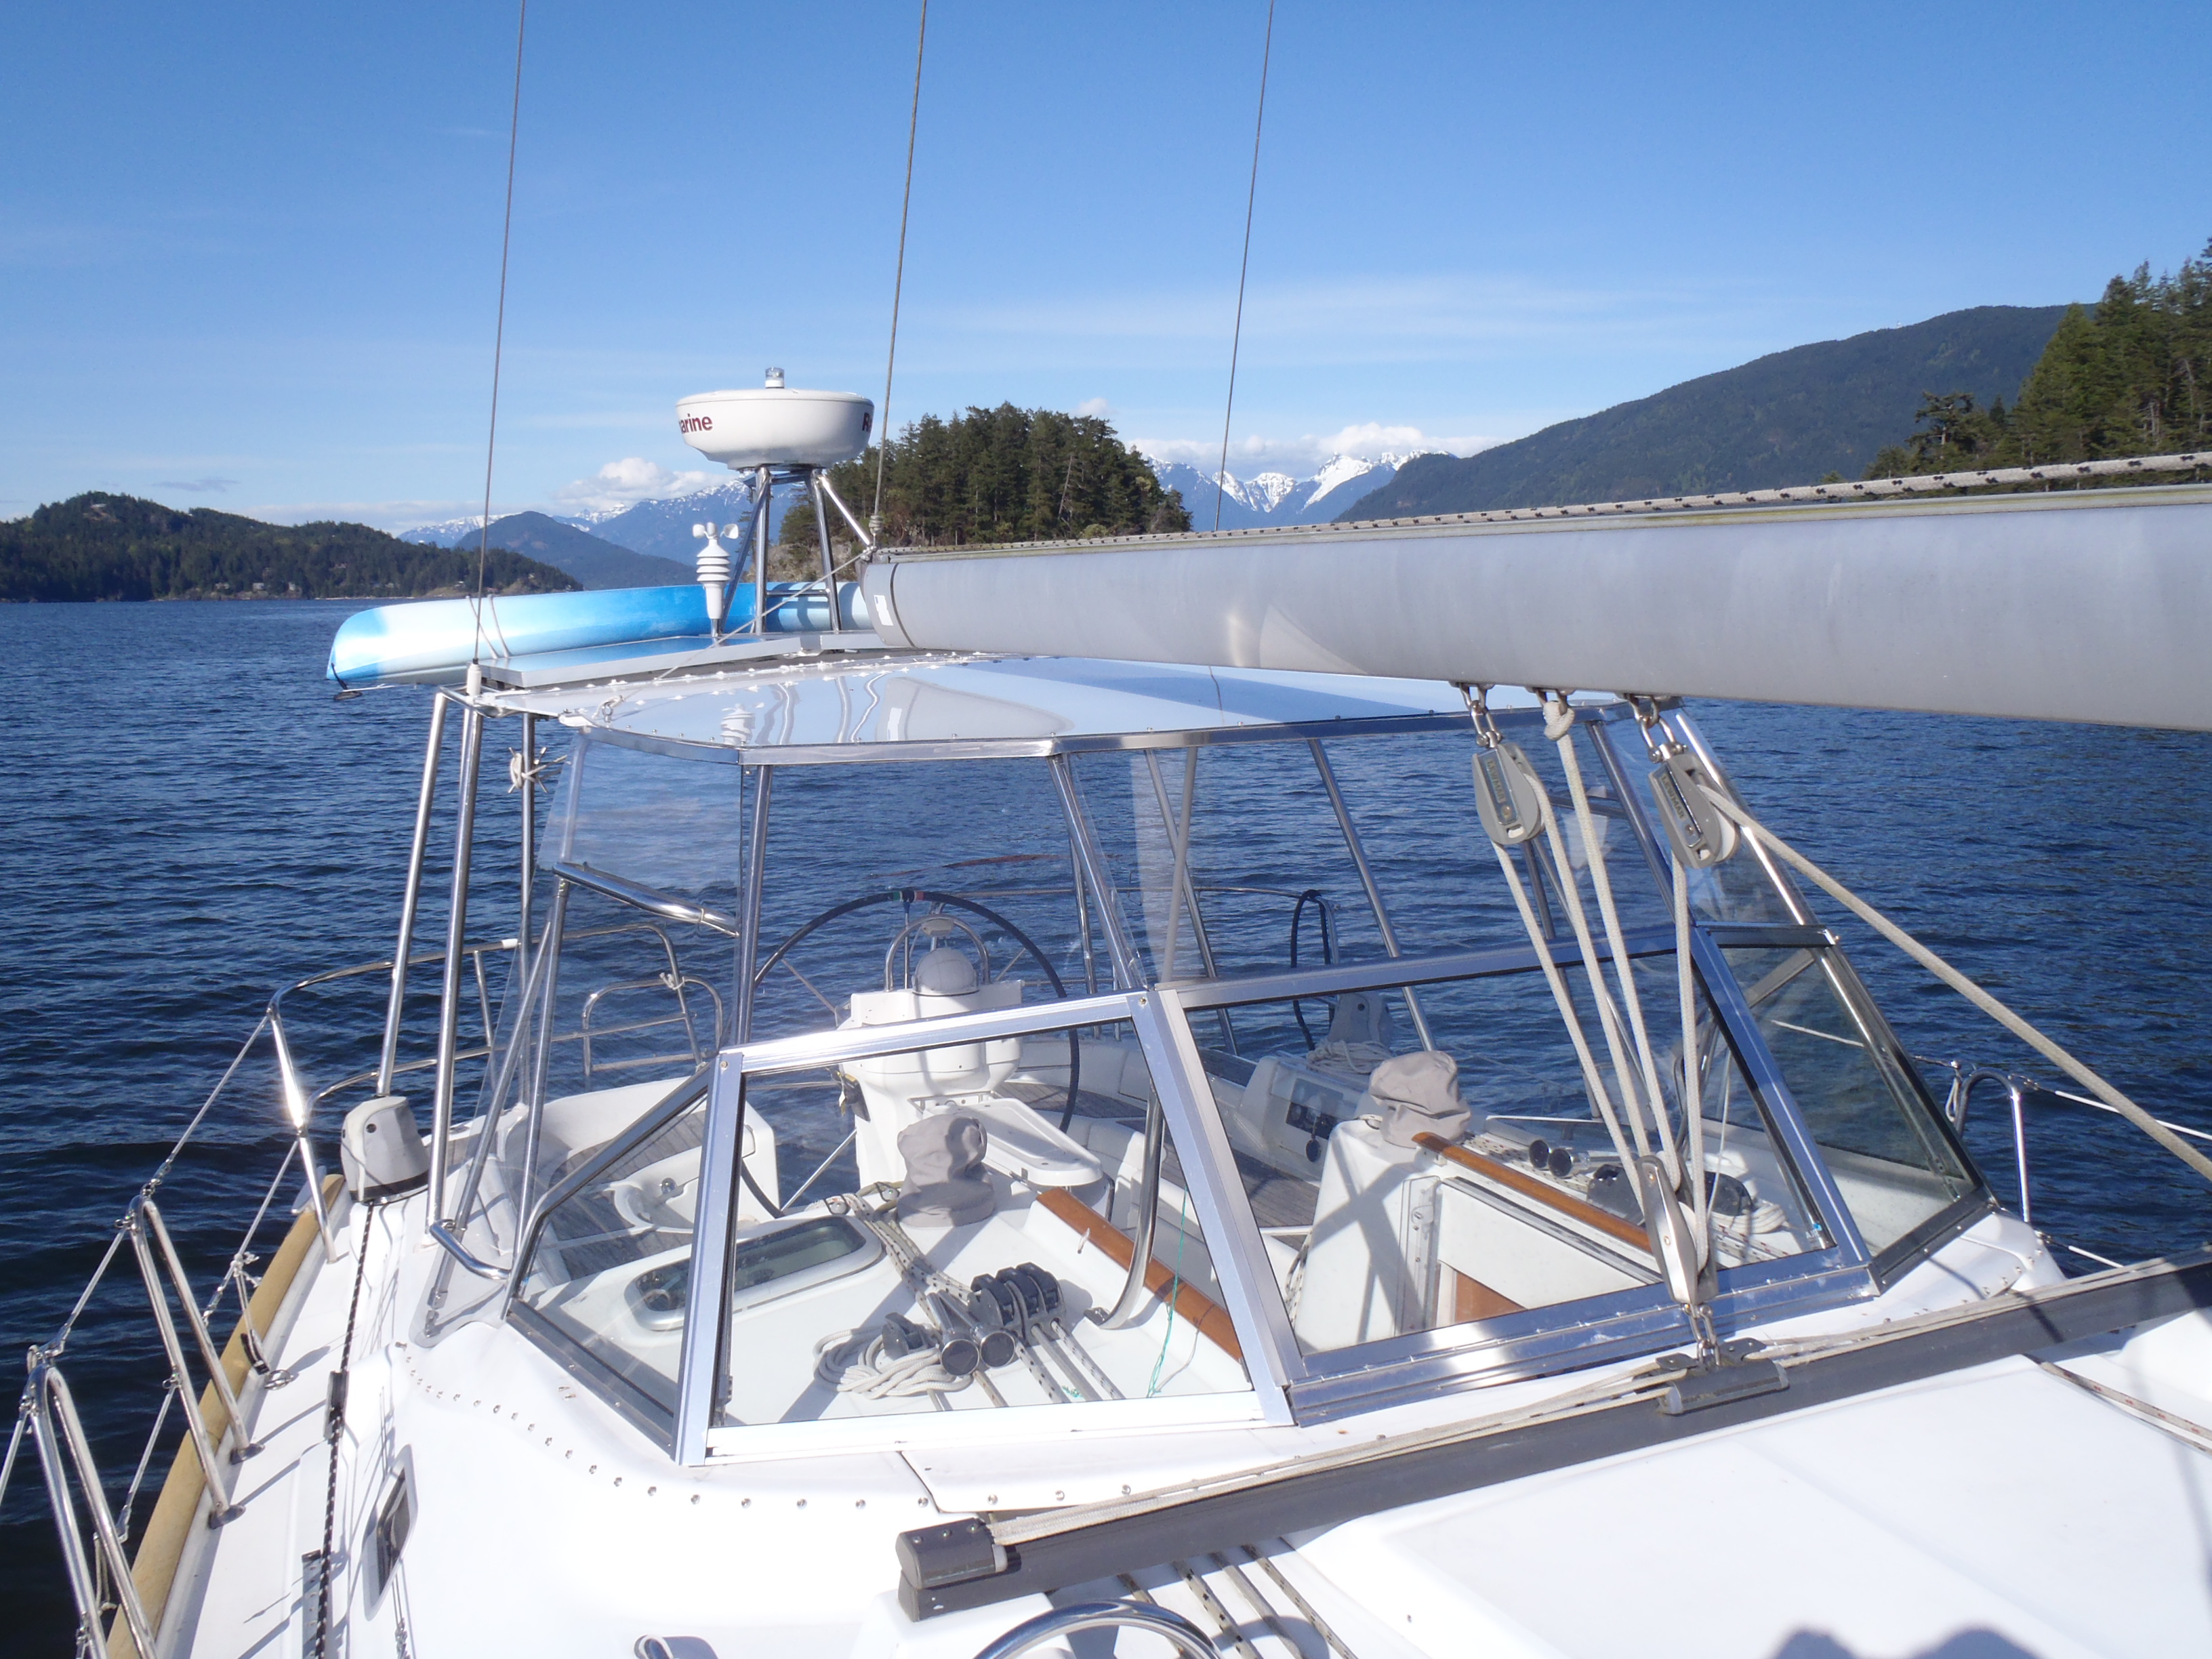 2007 Beneteau 423 Sailboat for sale in British Columbia, Canada - image 24 